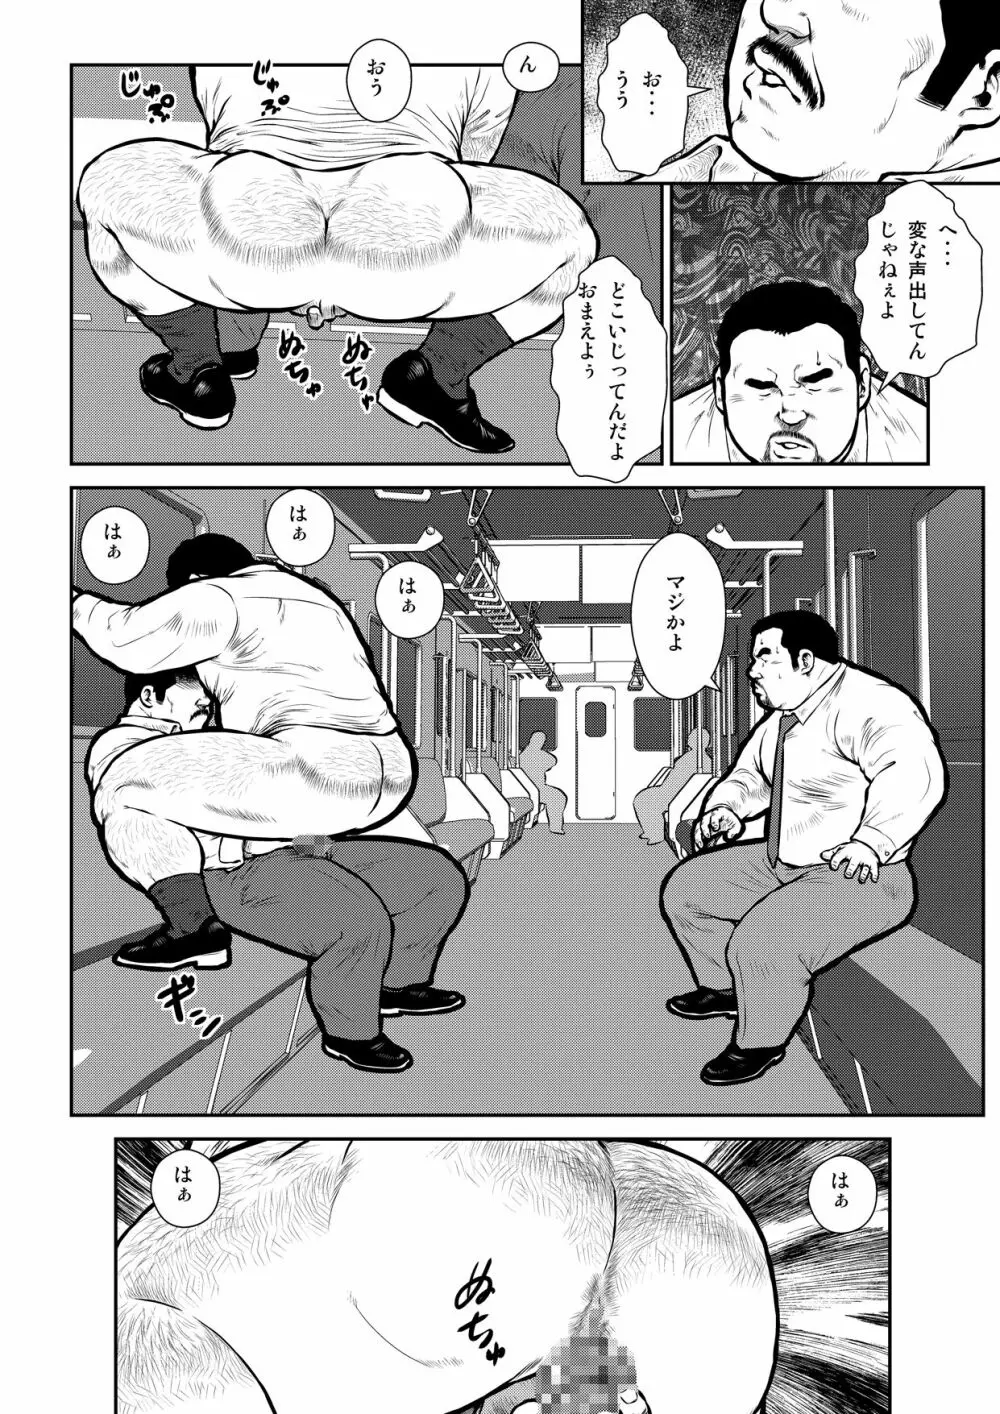 穴場2〜地下鉄〜 6ページ